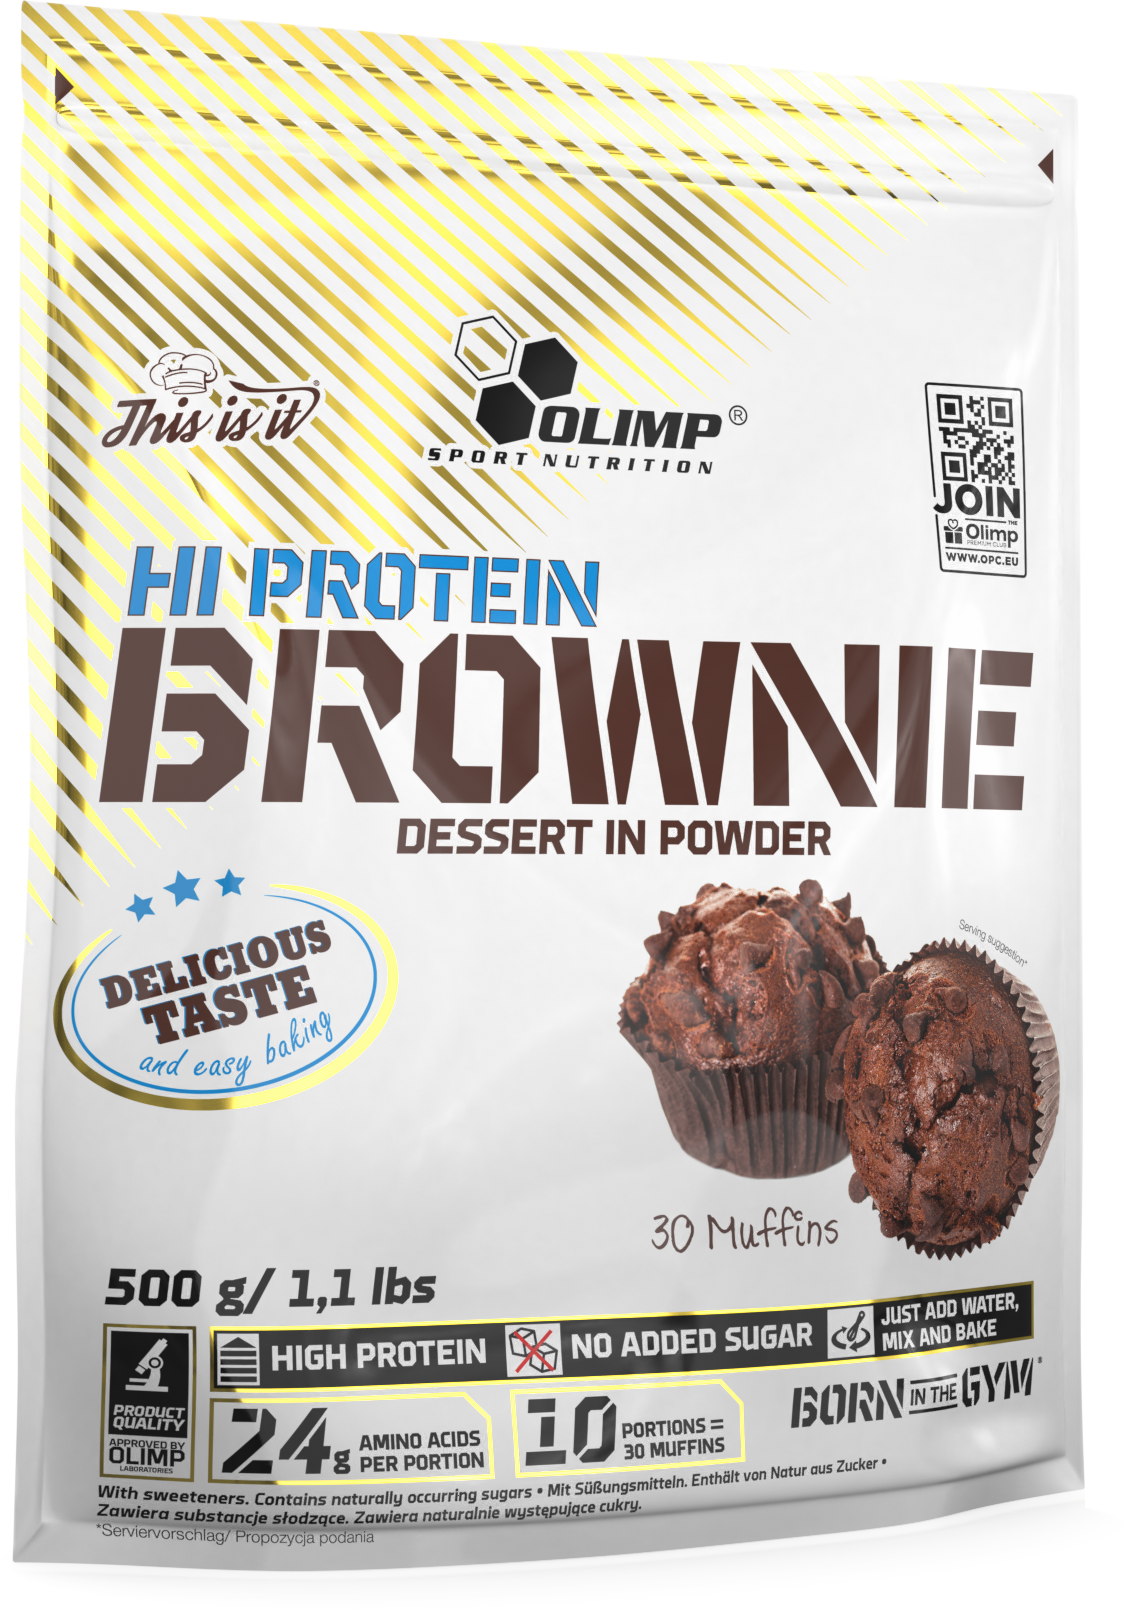 Hi Protein Brownie - BadiZdrav.BG